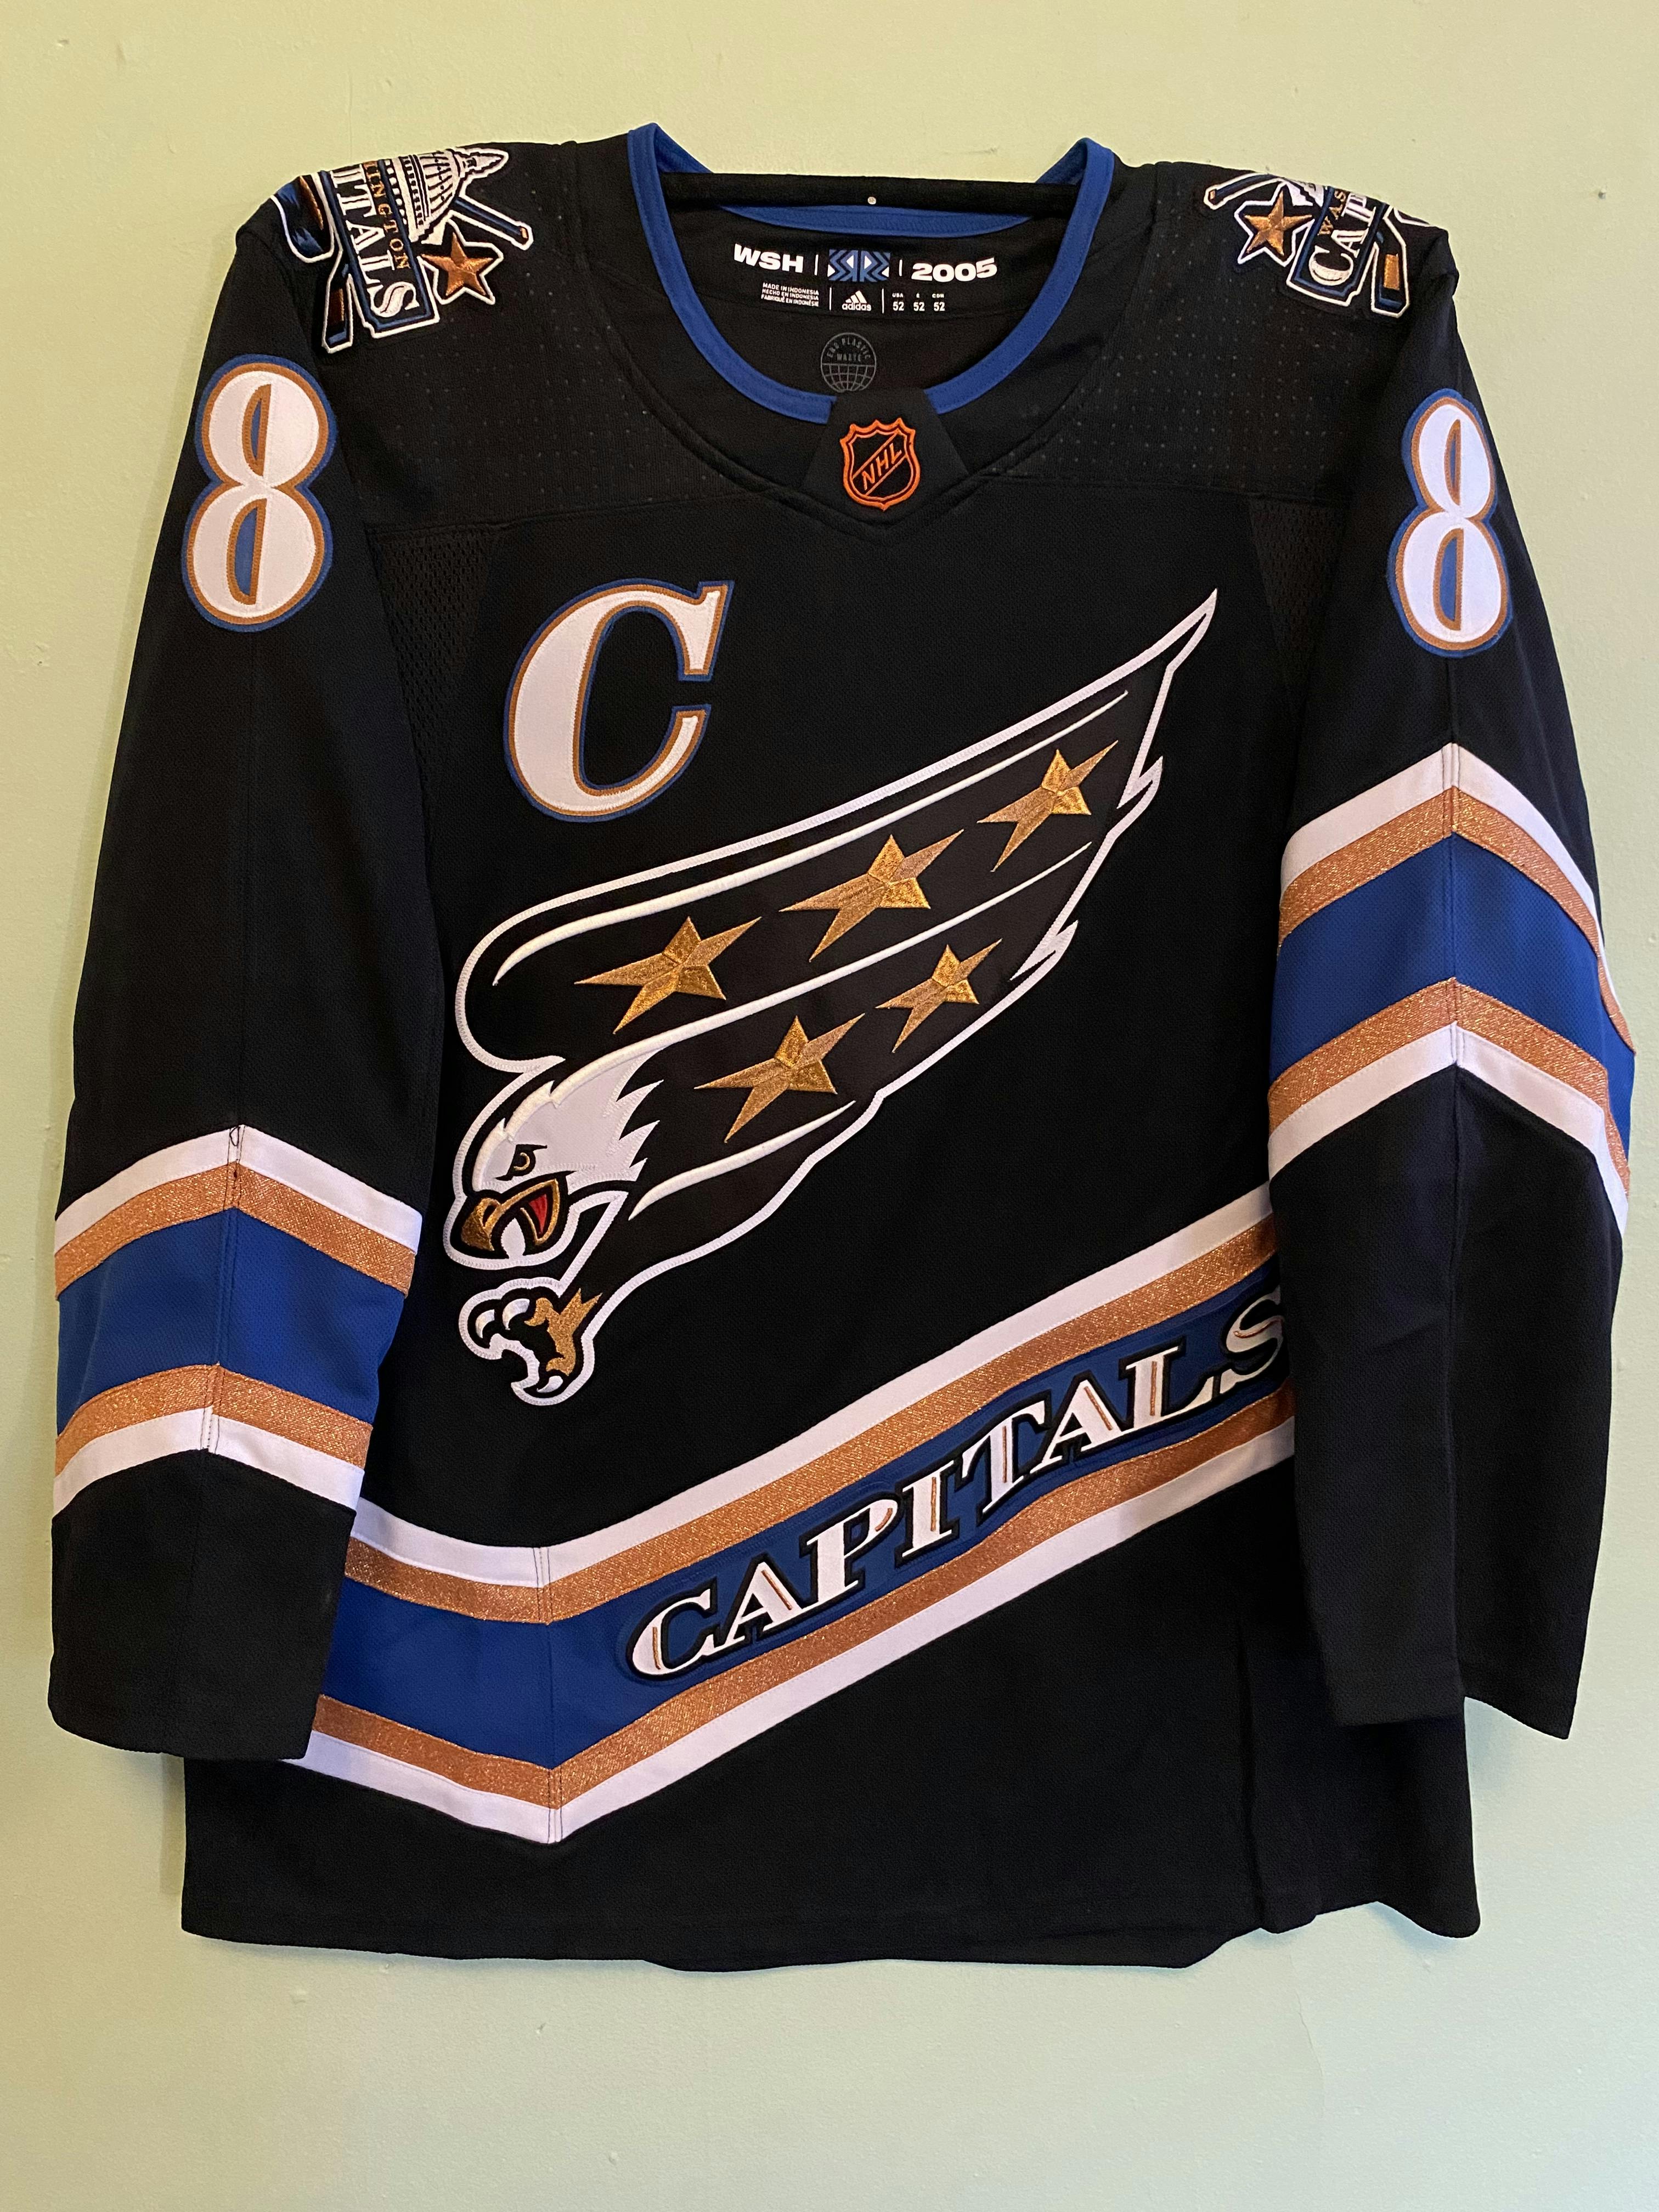 NEW* Alex Ovechkin Reverse Retro Washington Capitols NHL Jersey Size L 52